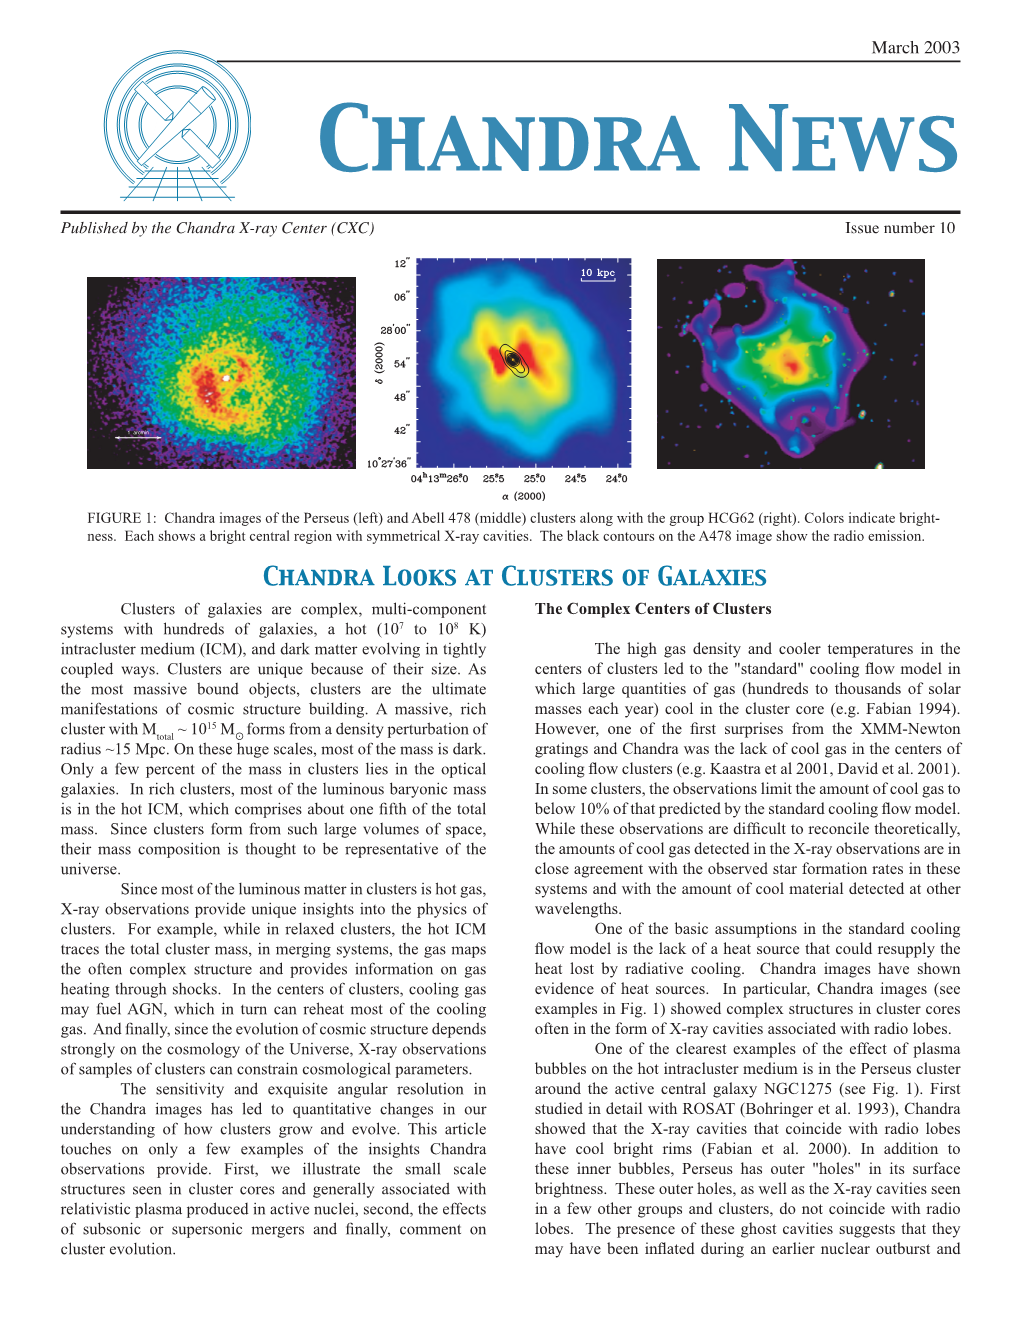 Chandra News